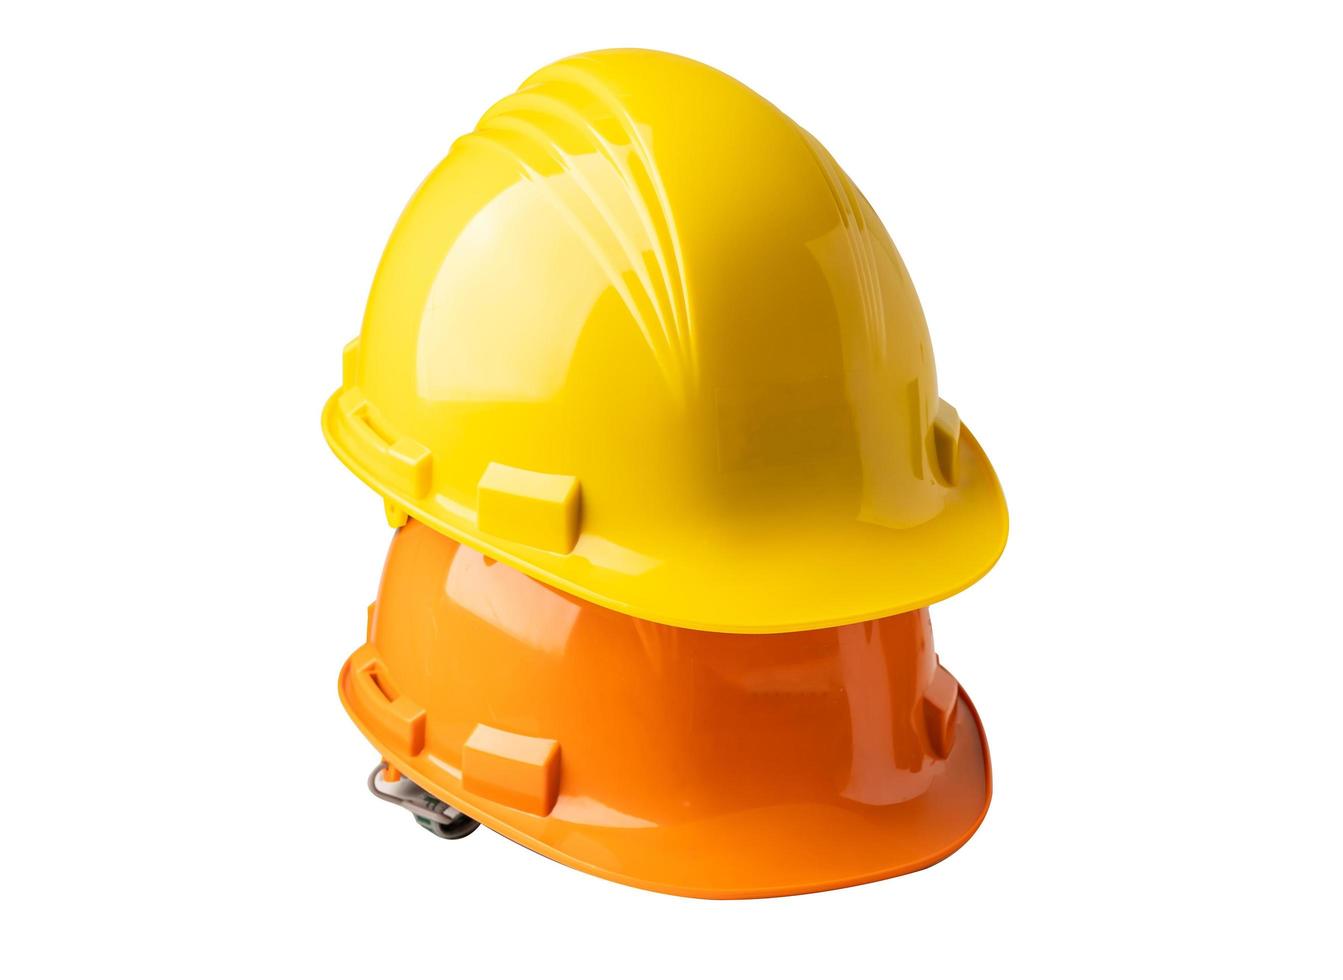 Construction helmet isolated on white background, photo